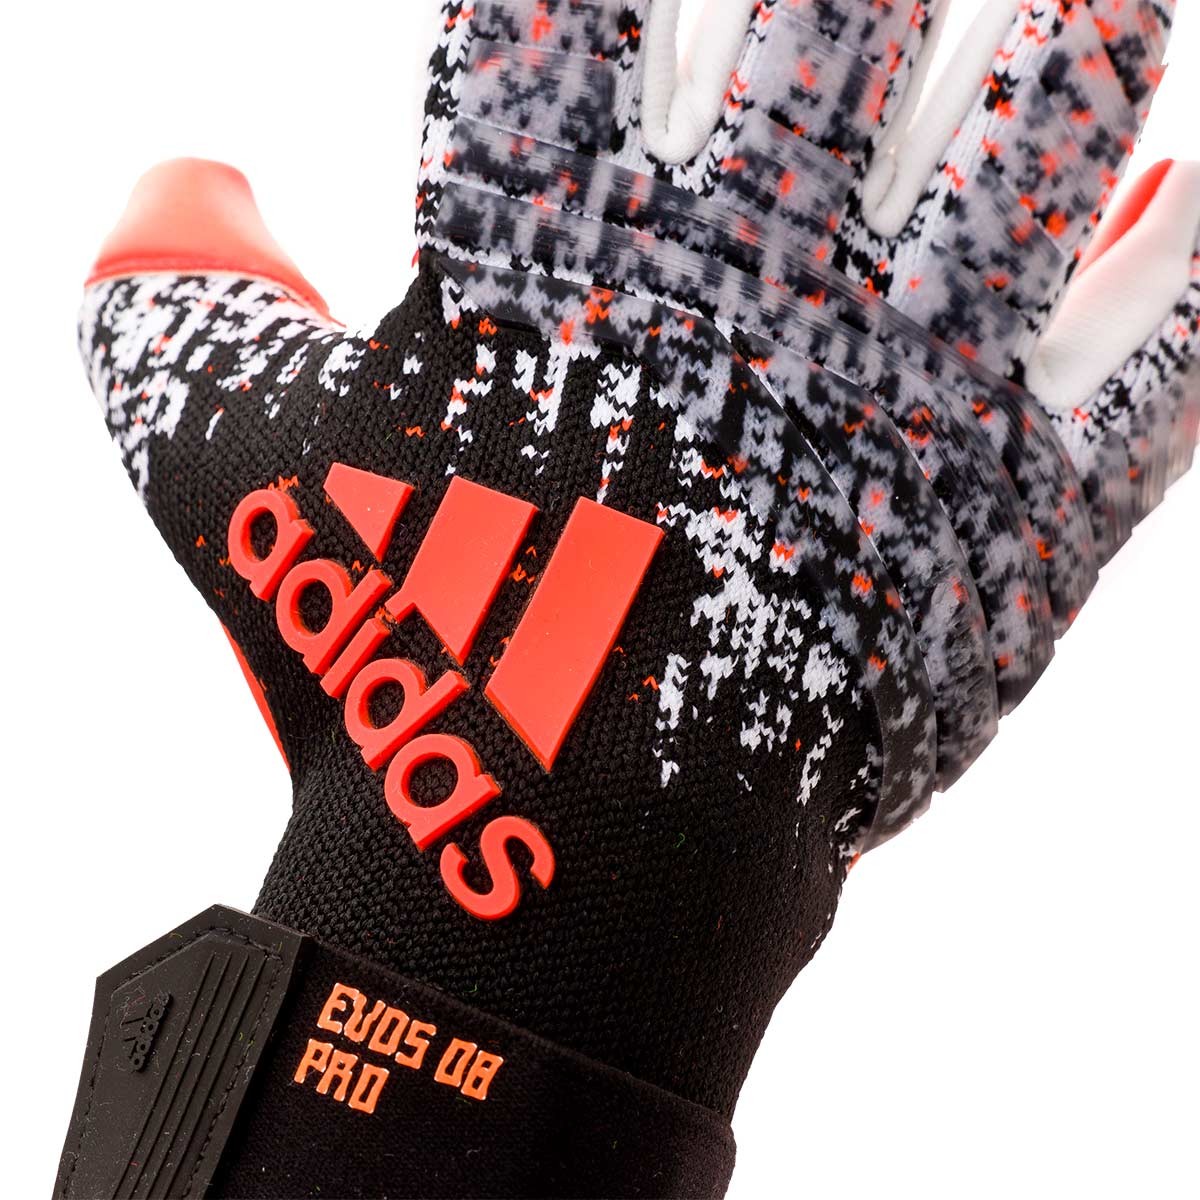 Glove adidas Predator Pro EVDS08 Black 